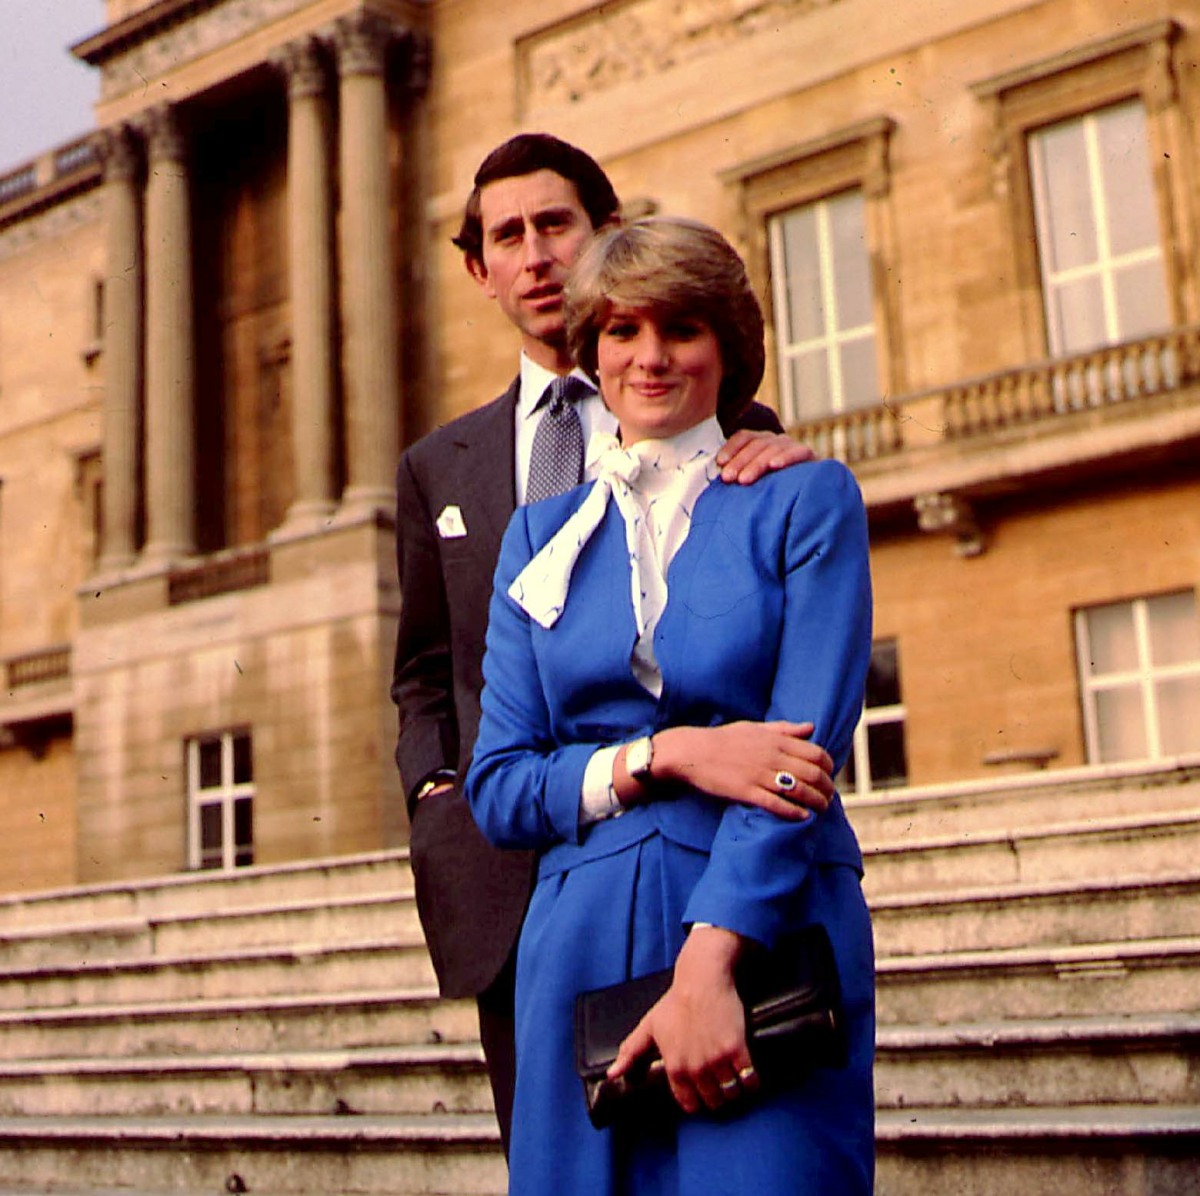 20th Anniversary of Princess Diana's Death